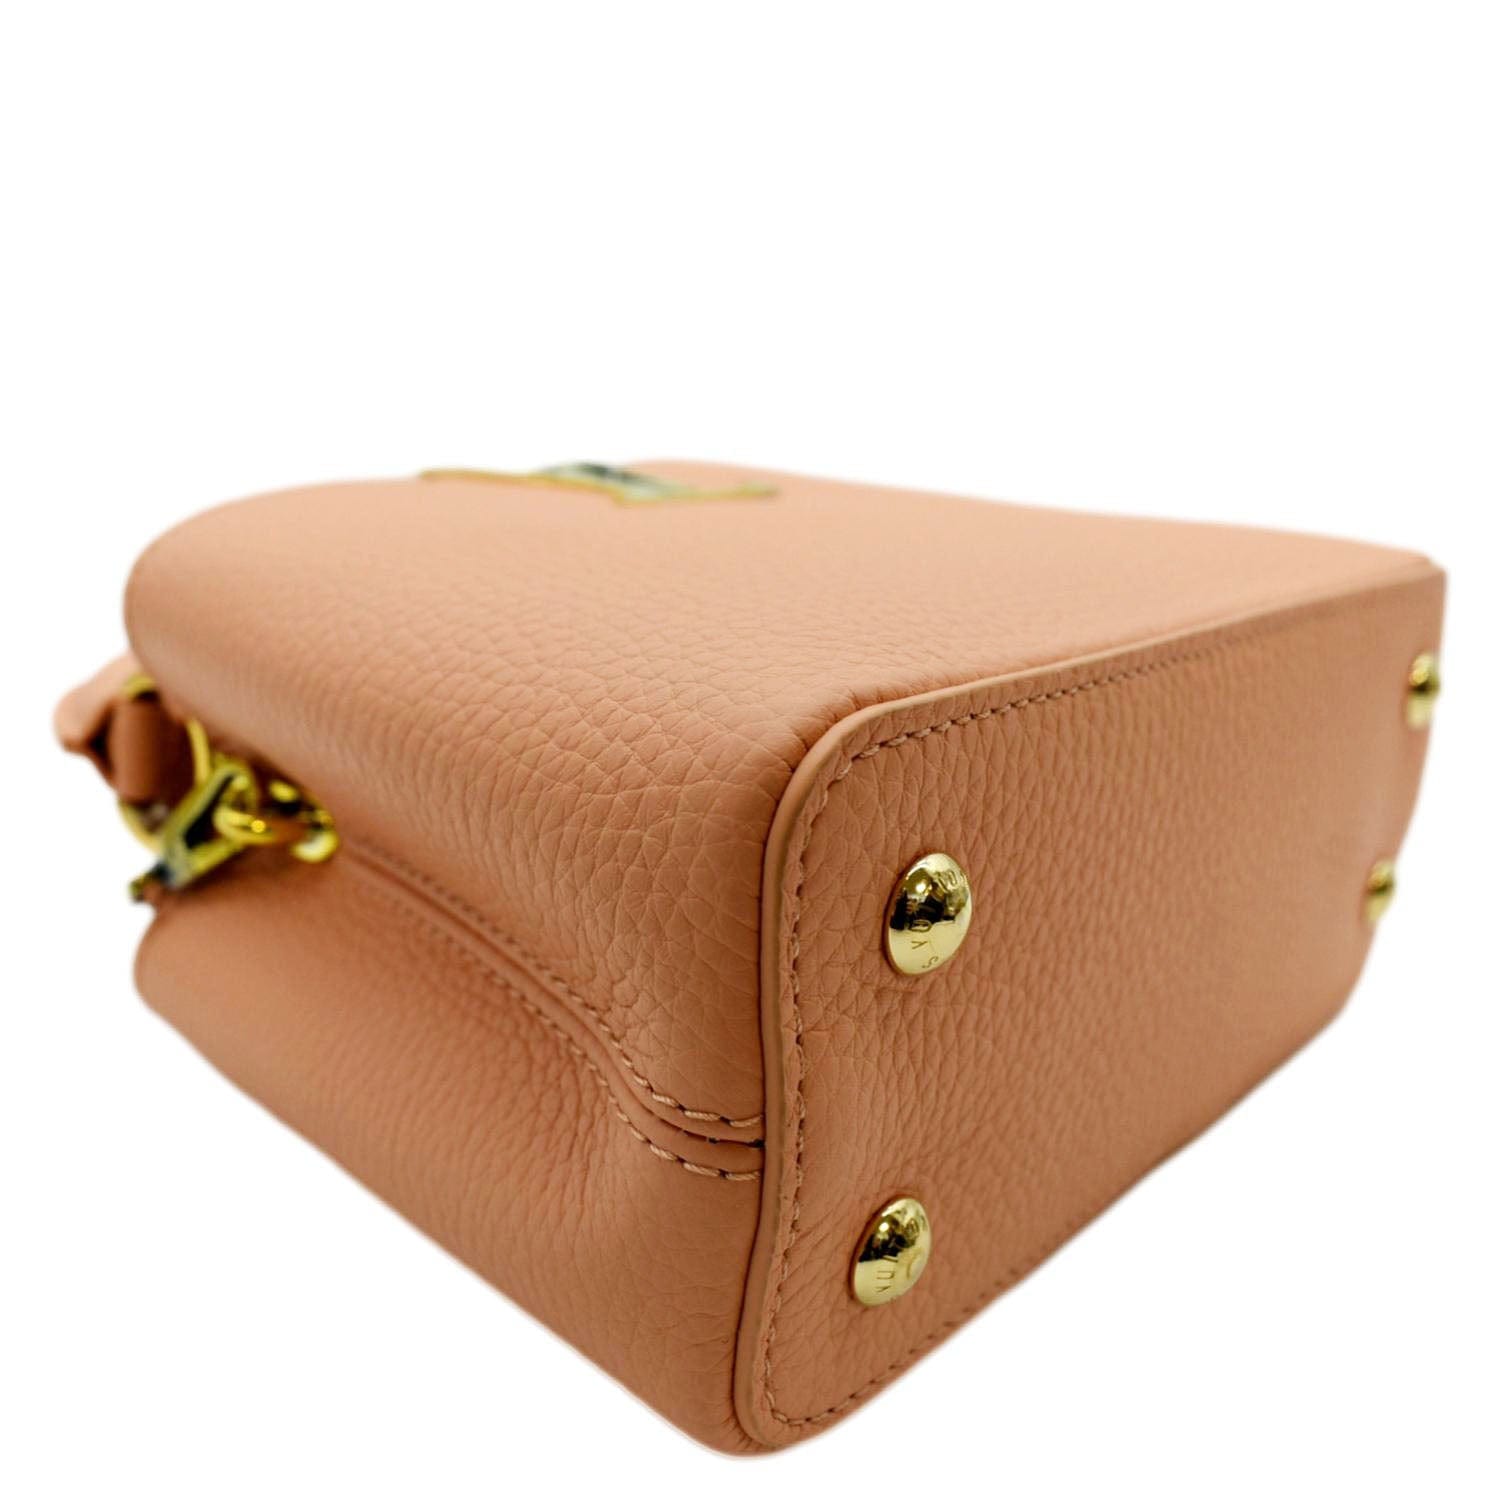 Capucines Mini - Luxury All Collections - Handbags